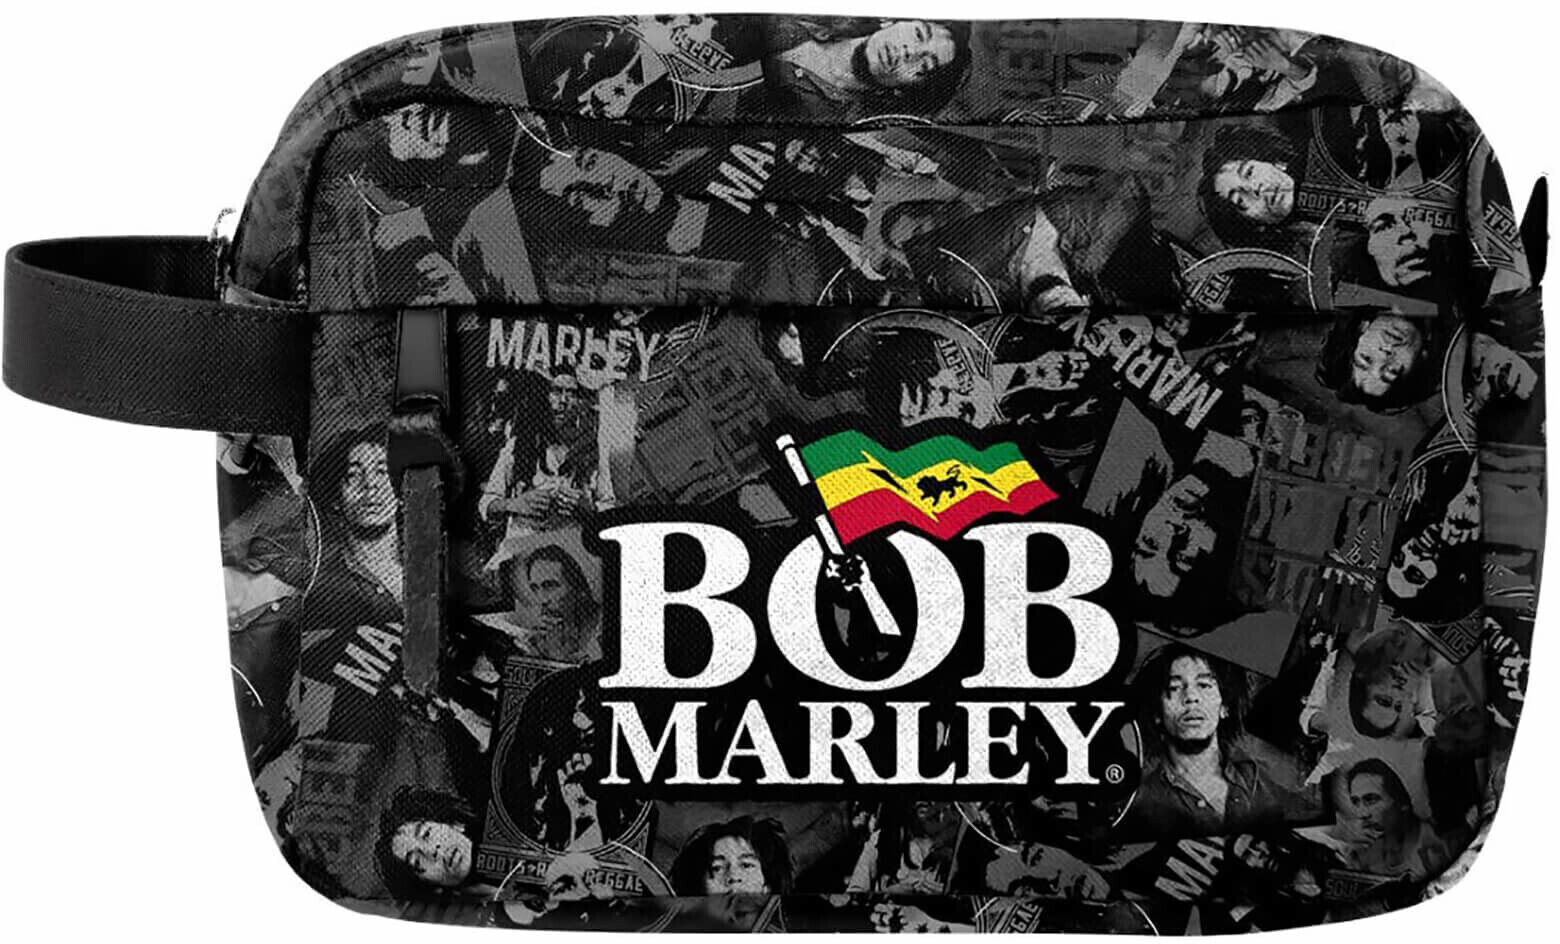 Saco de cosméticos Bob Marley Collage Saco de cosméticos